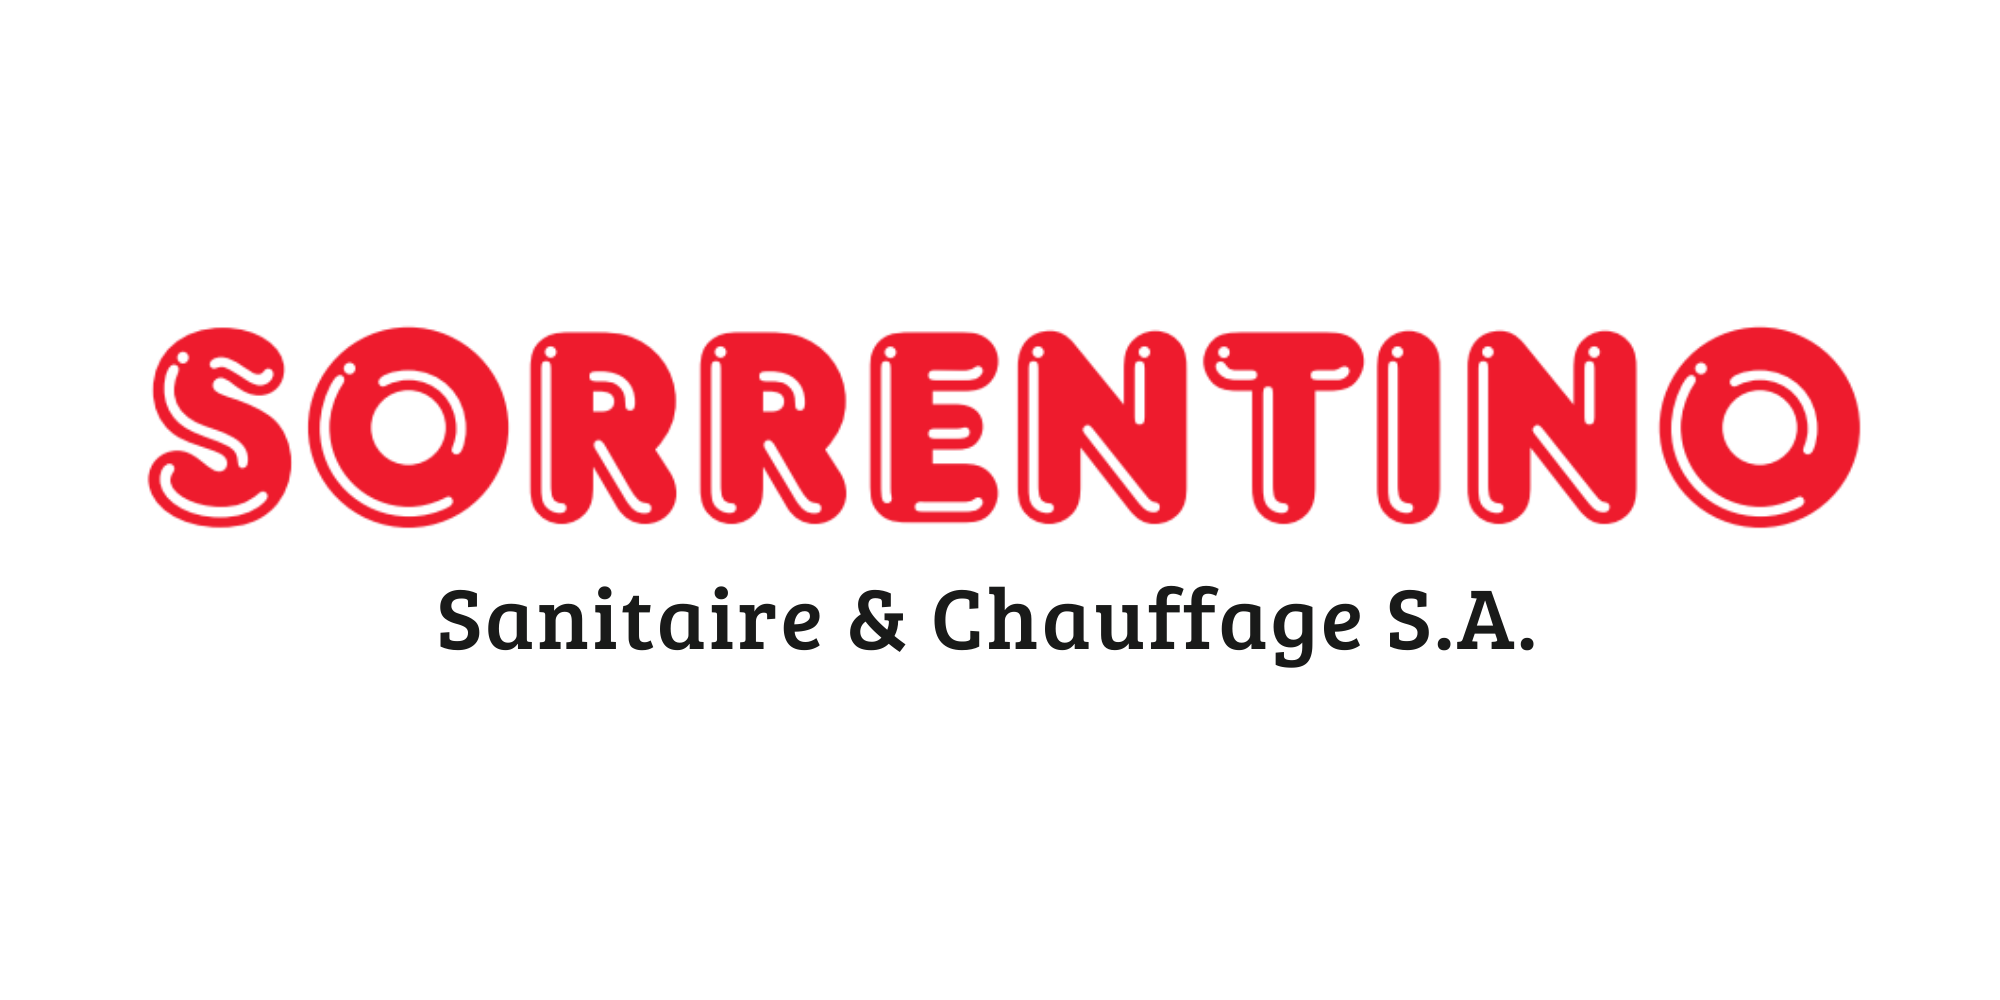 Sorrentino Sanitaire et Chauffage SA sans maj (1)